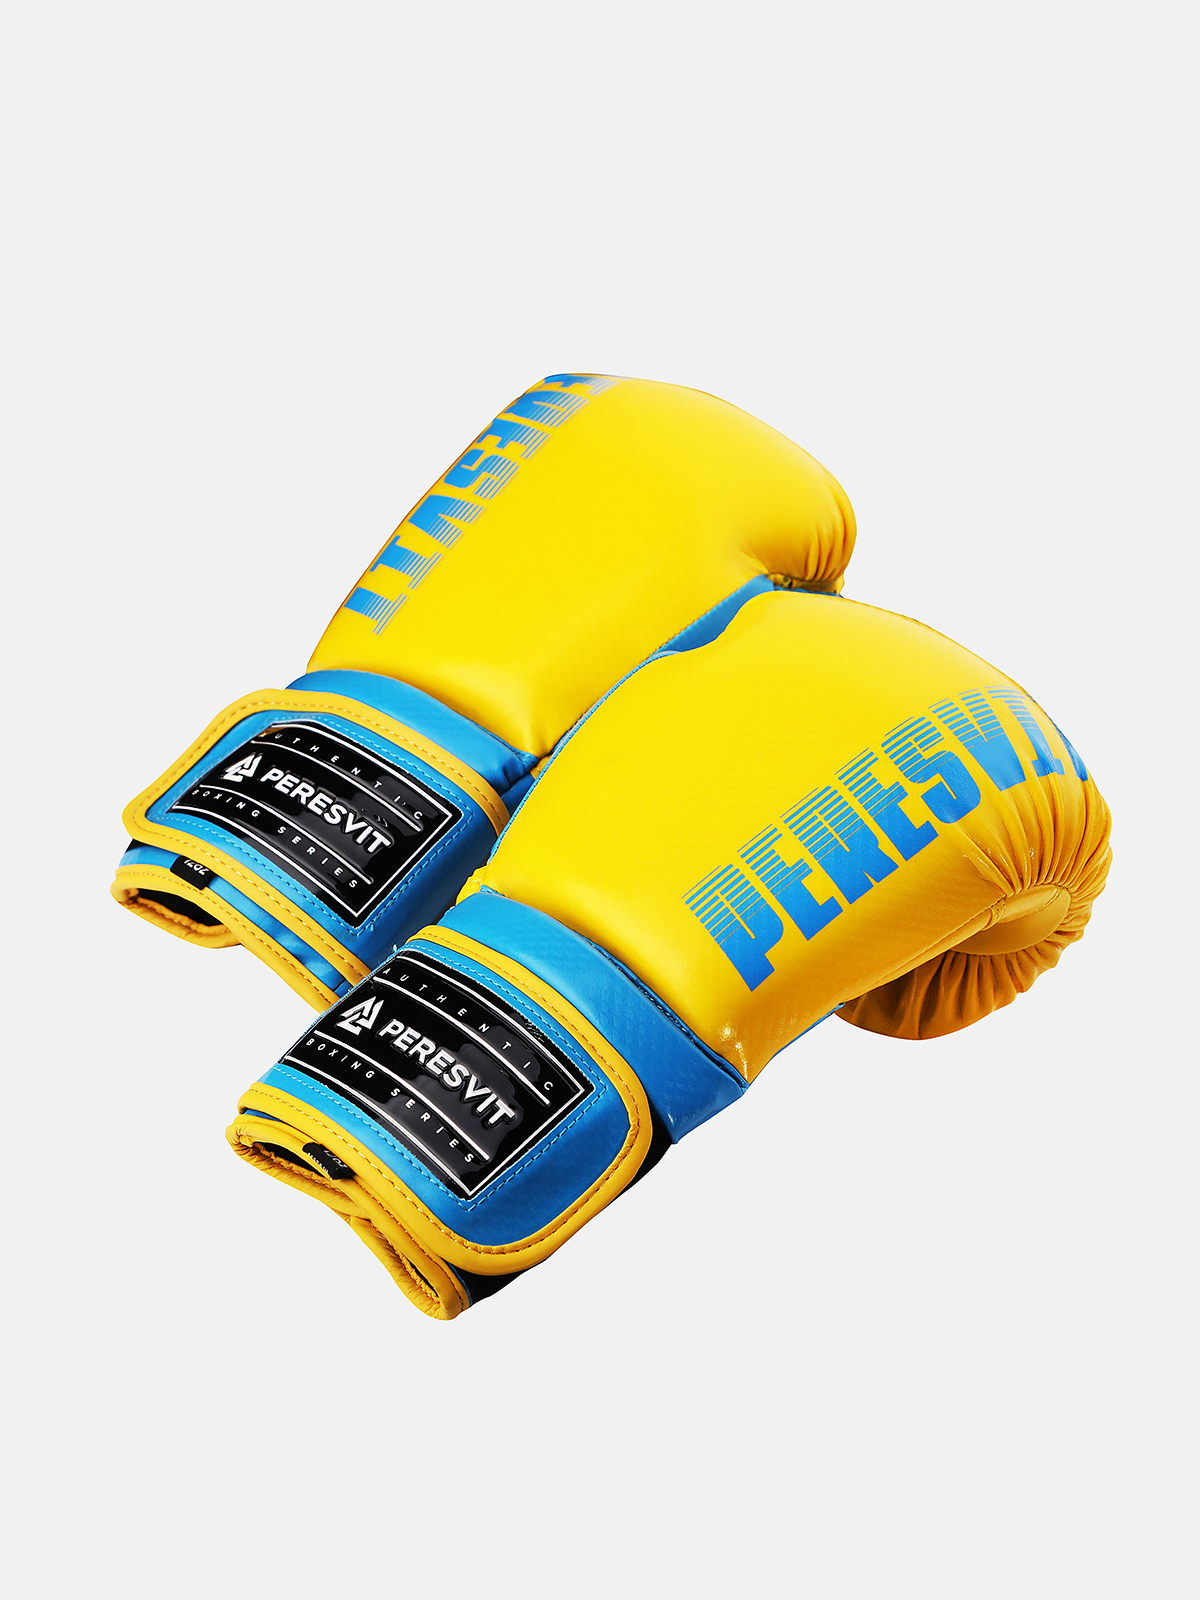 Peresvit Core Boxing Gloves Blue Yellow, Photo No. 4